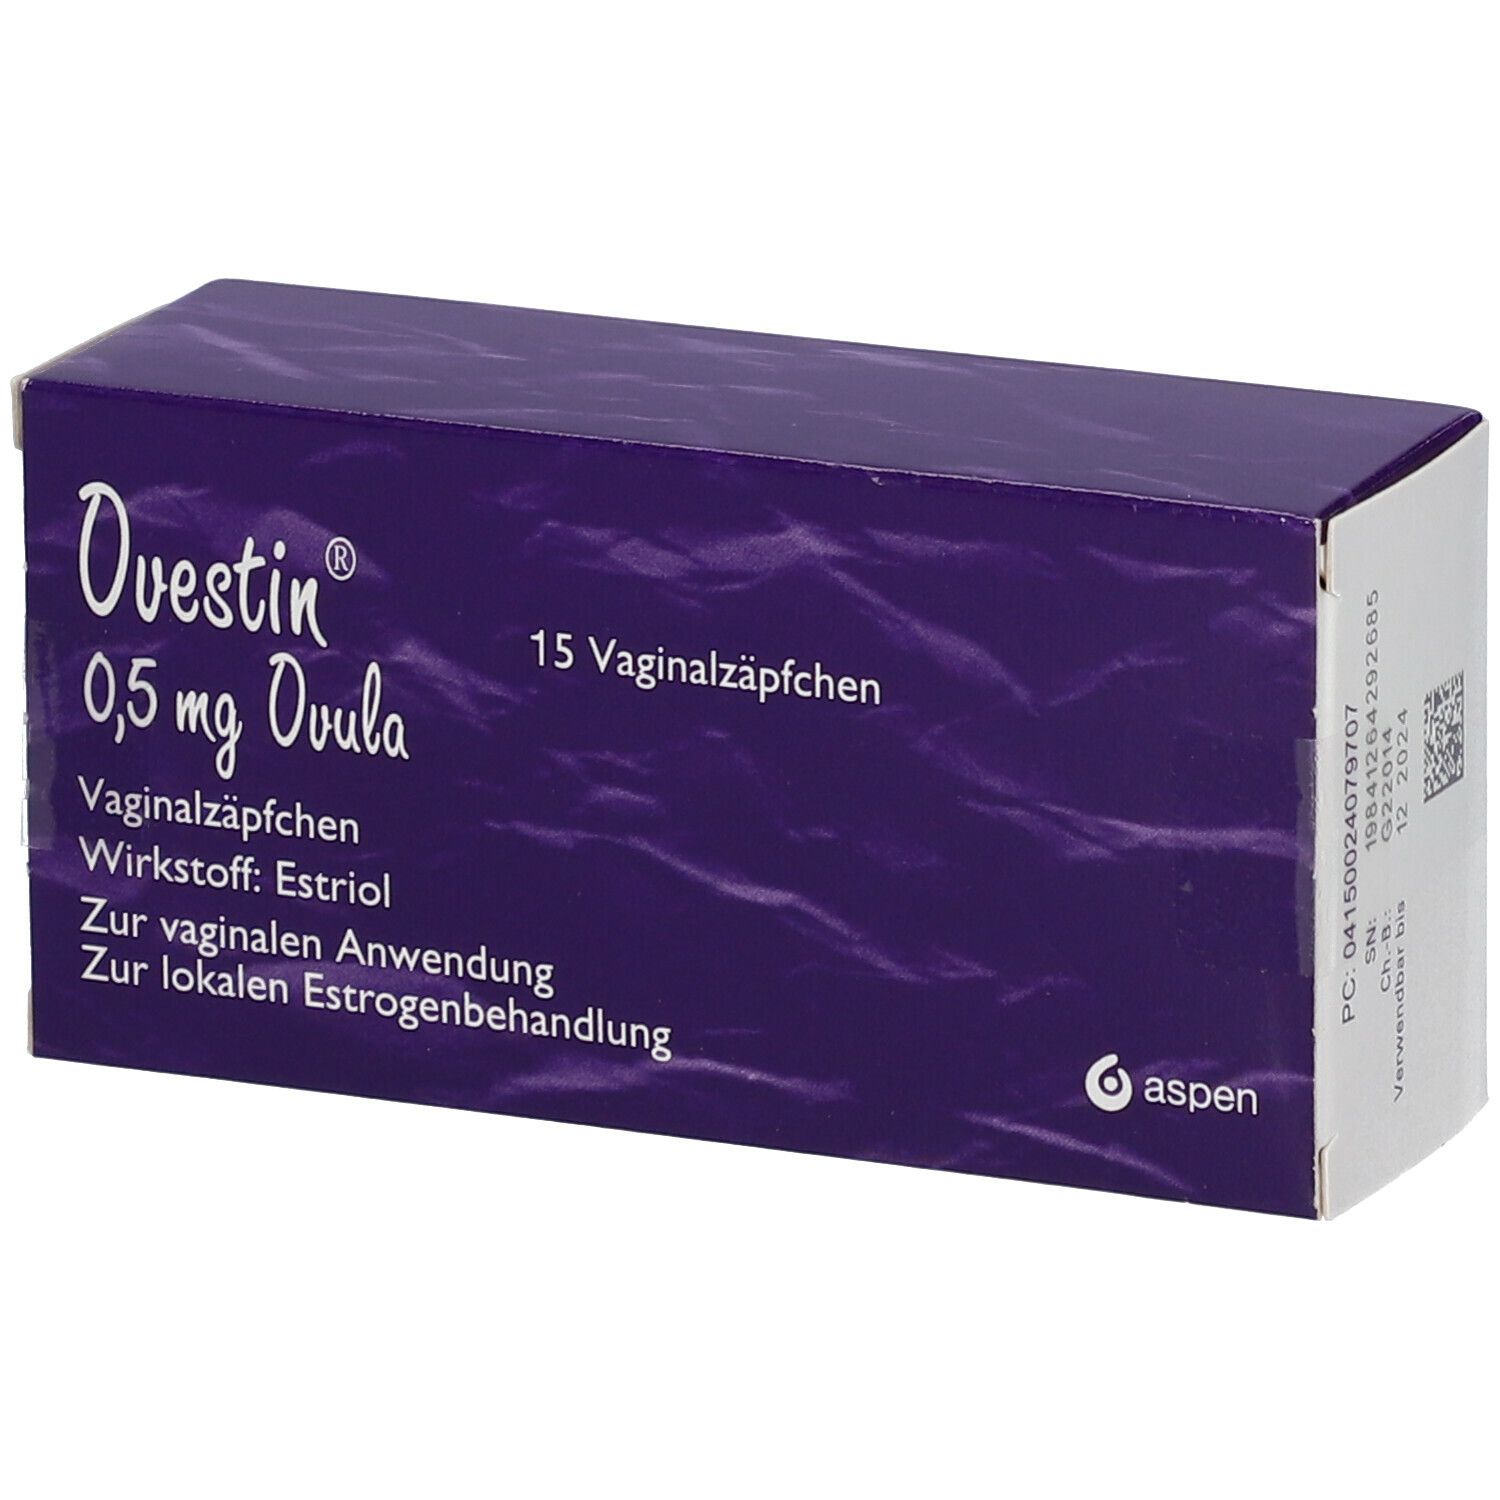 Ovestin® 0,5 mg Ovula